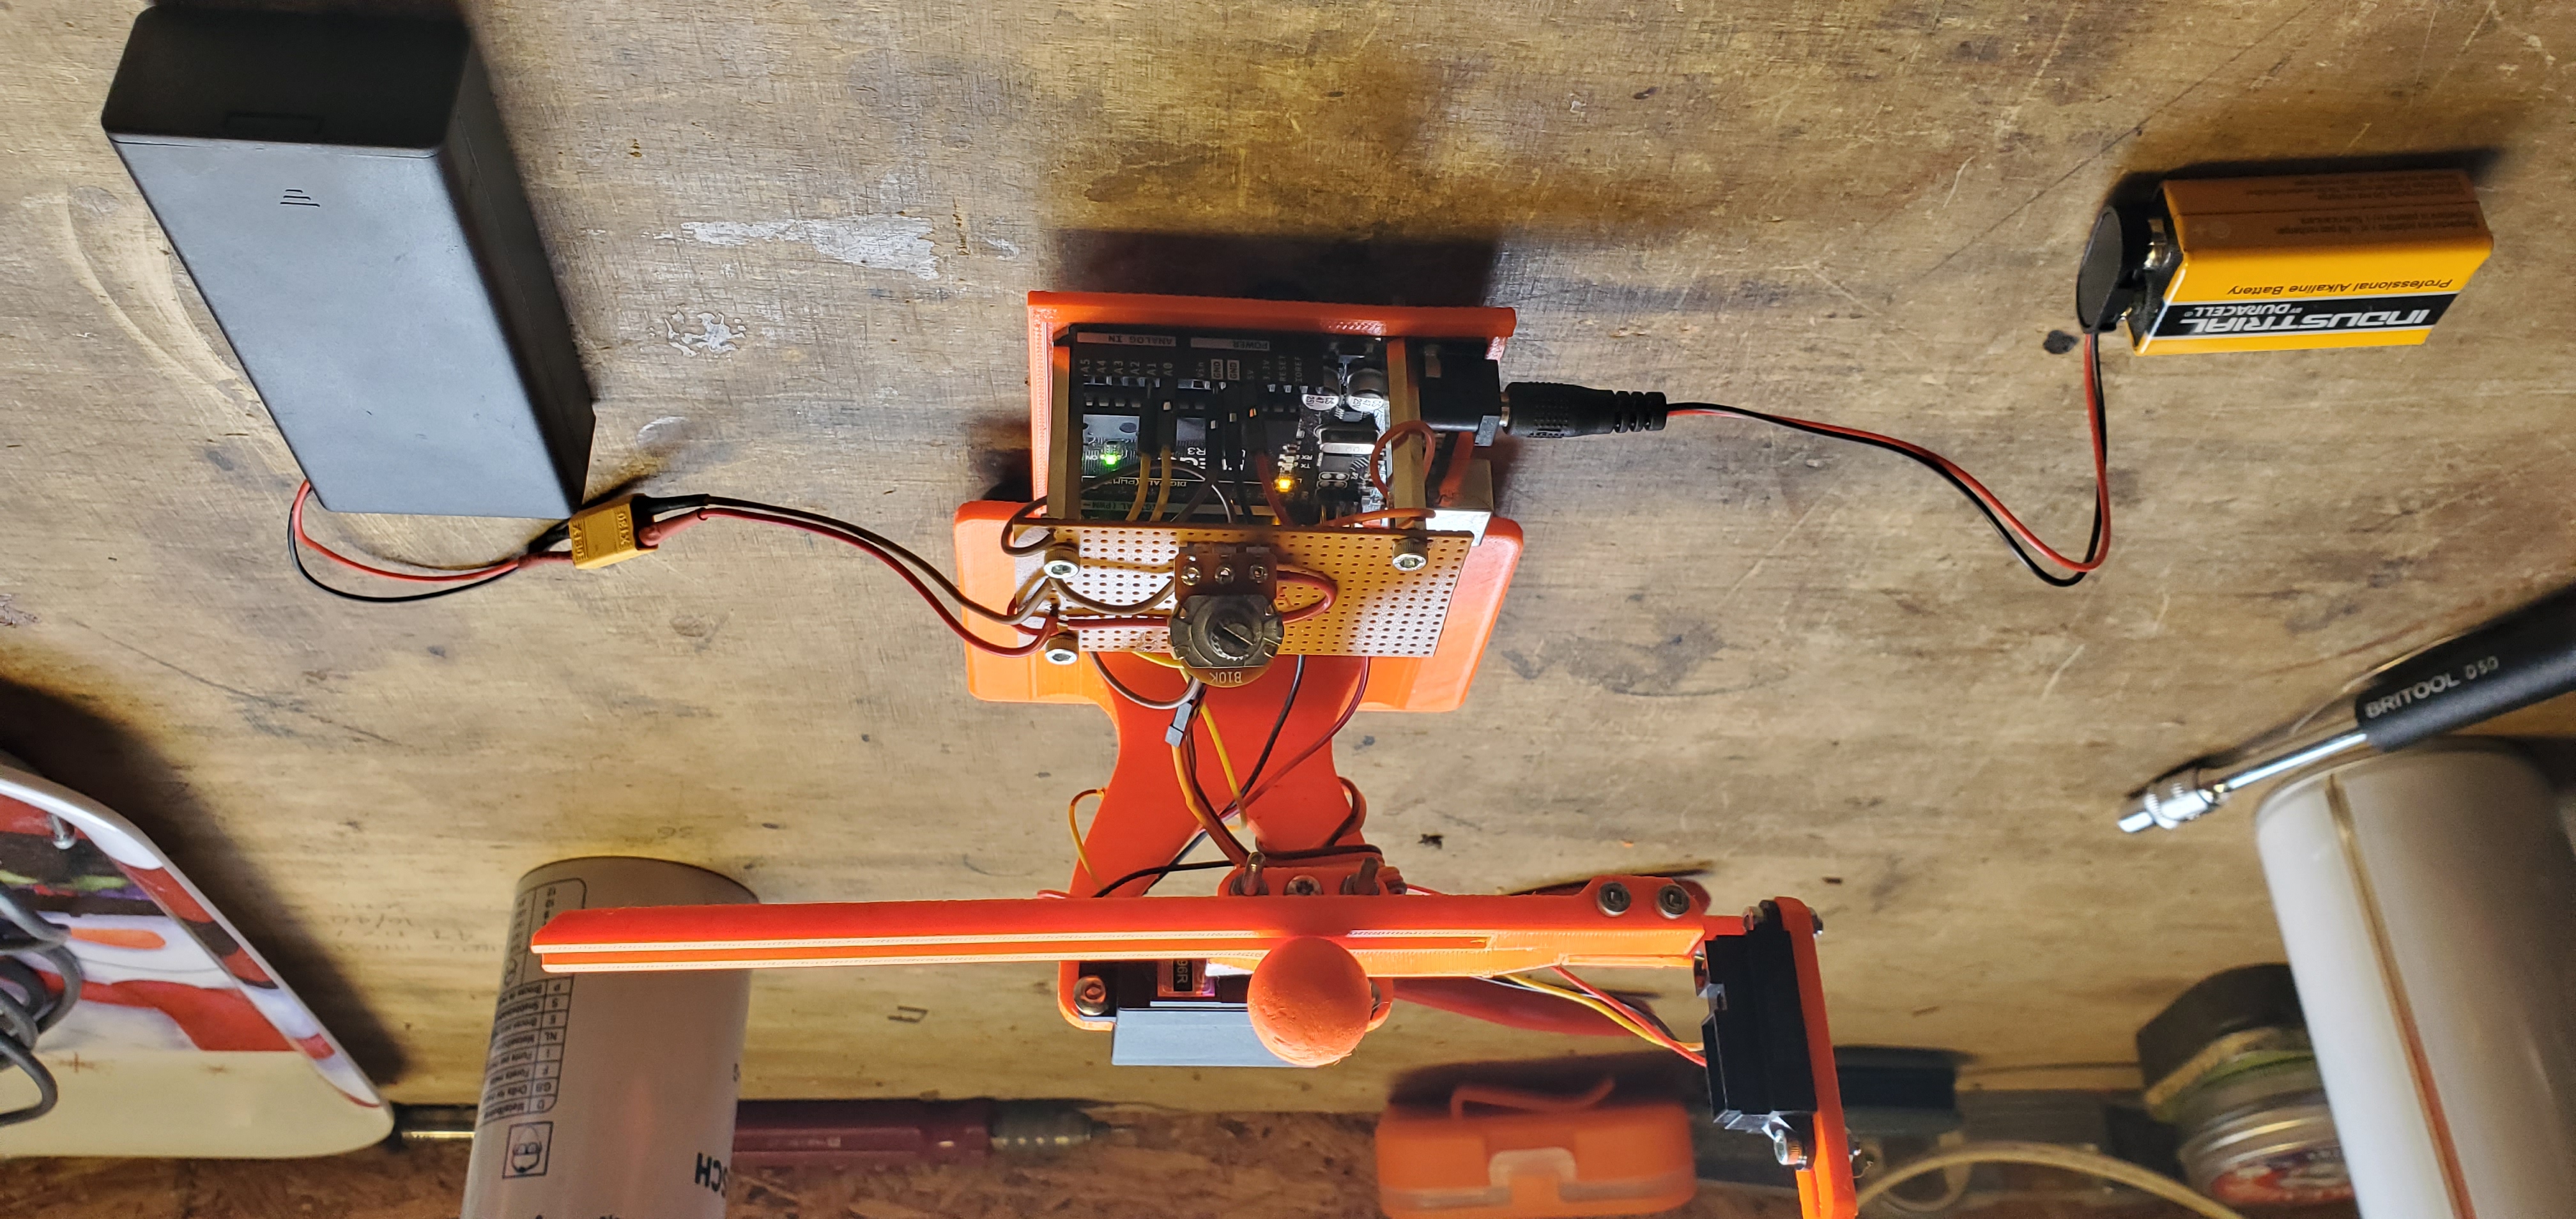 Arduino PID seesaw: A ball balancing machine